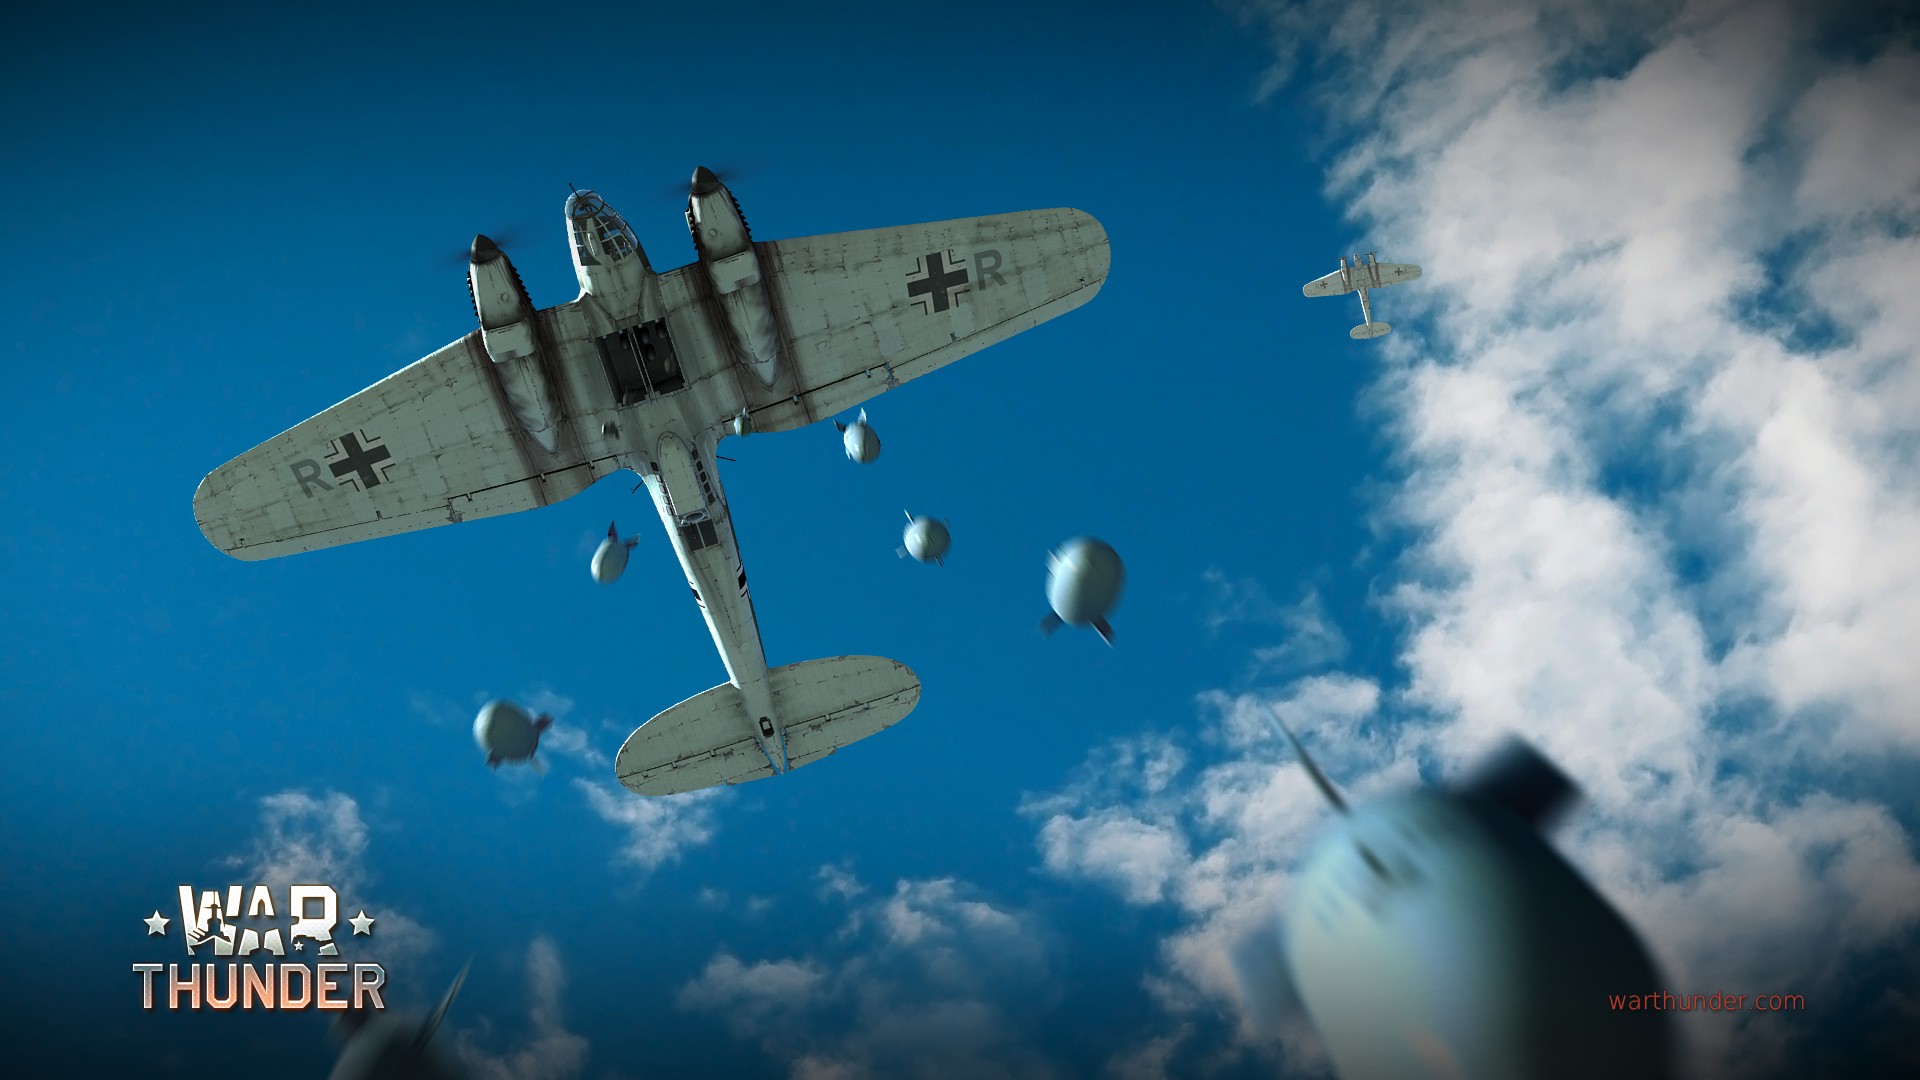 General 1920x1080 War Thunder airplane Gaijin Entertainment video games Luftwaffe Bomber World War II military aircraft aircraft military vehicle vehicle PC gaming video game art